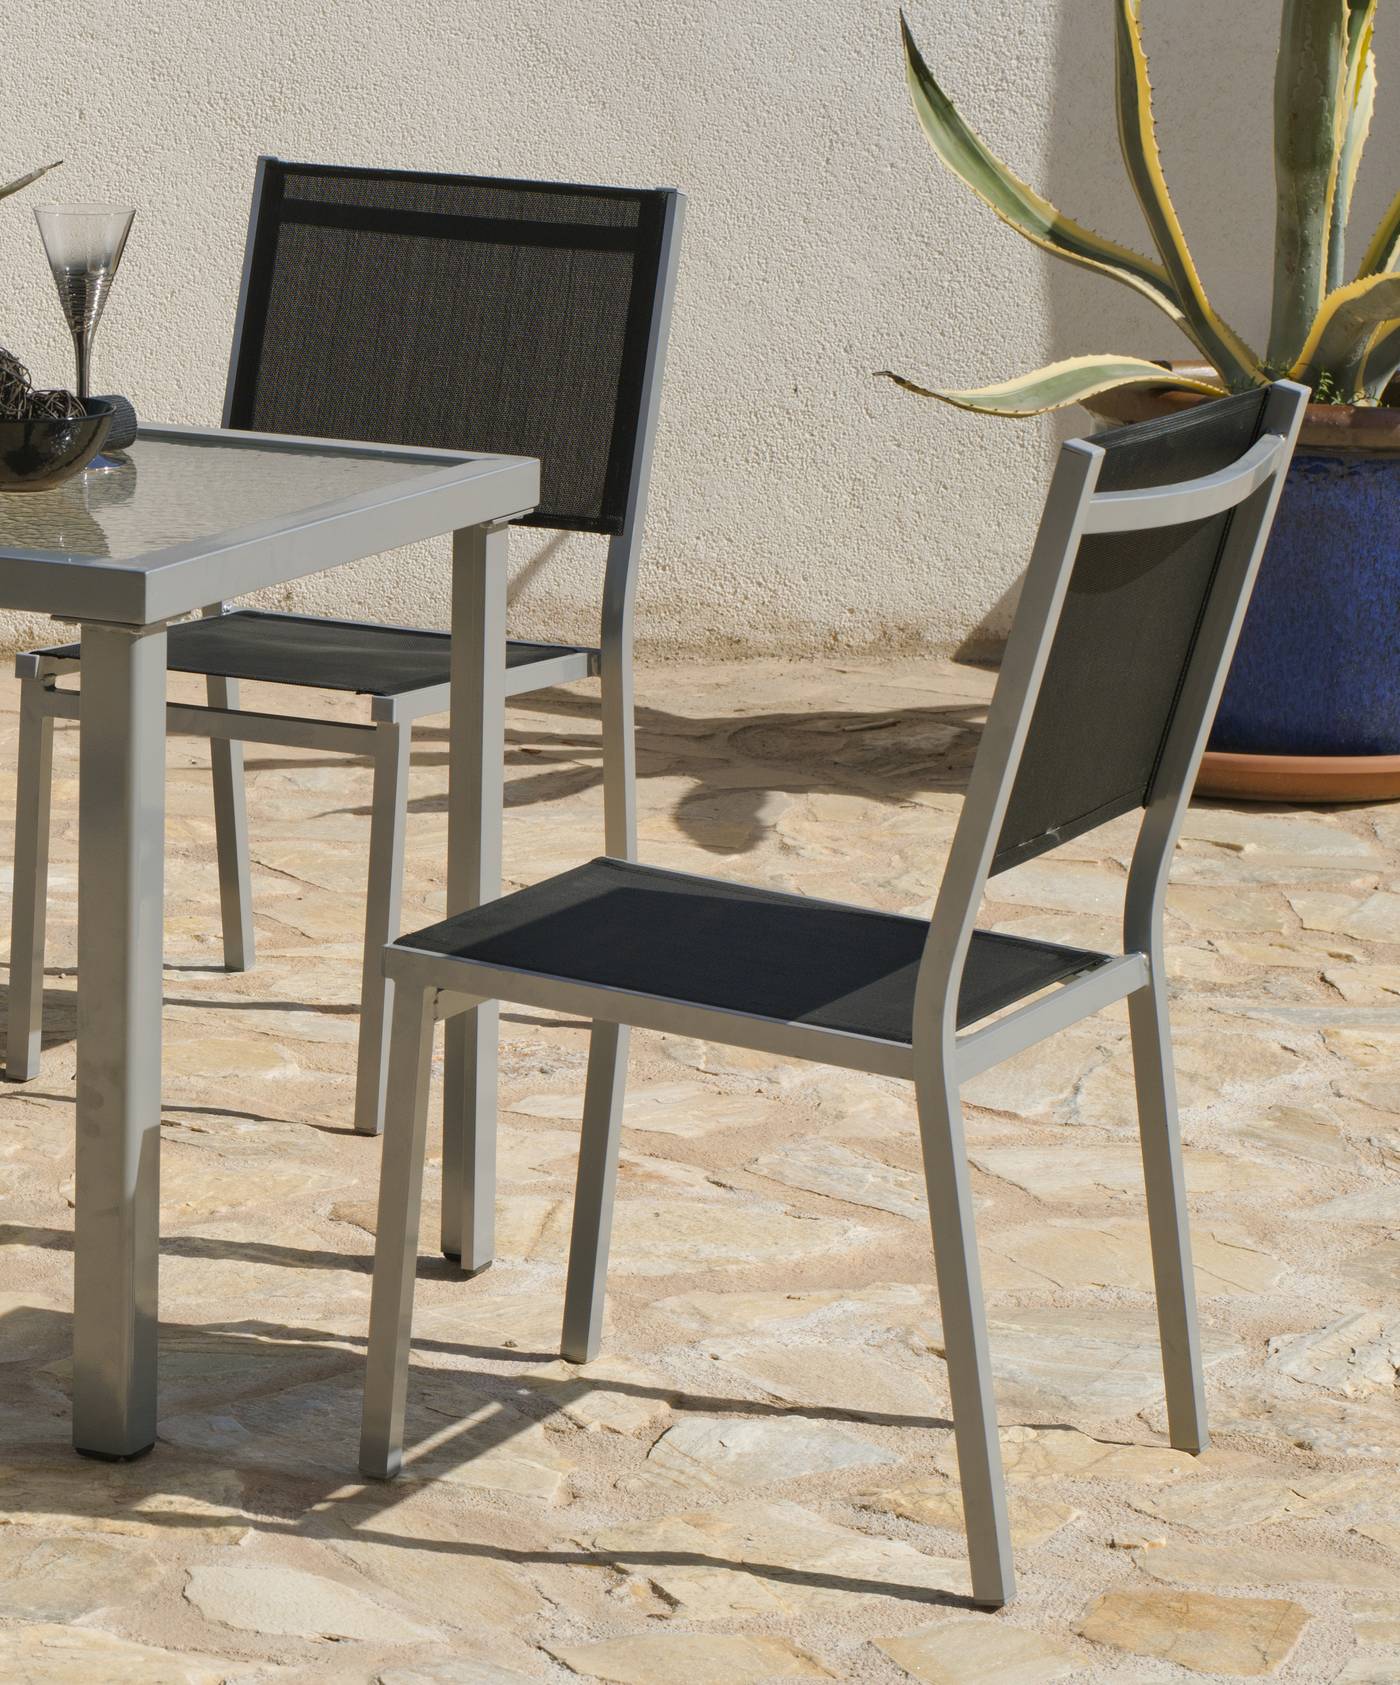 Set Aluminio Baltimore-130 - Conjunto de aluminio color plata: mesa rectangular de 130 cm. y 4 sillas de aluminio y textilen